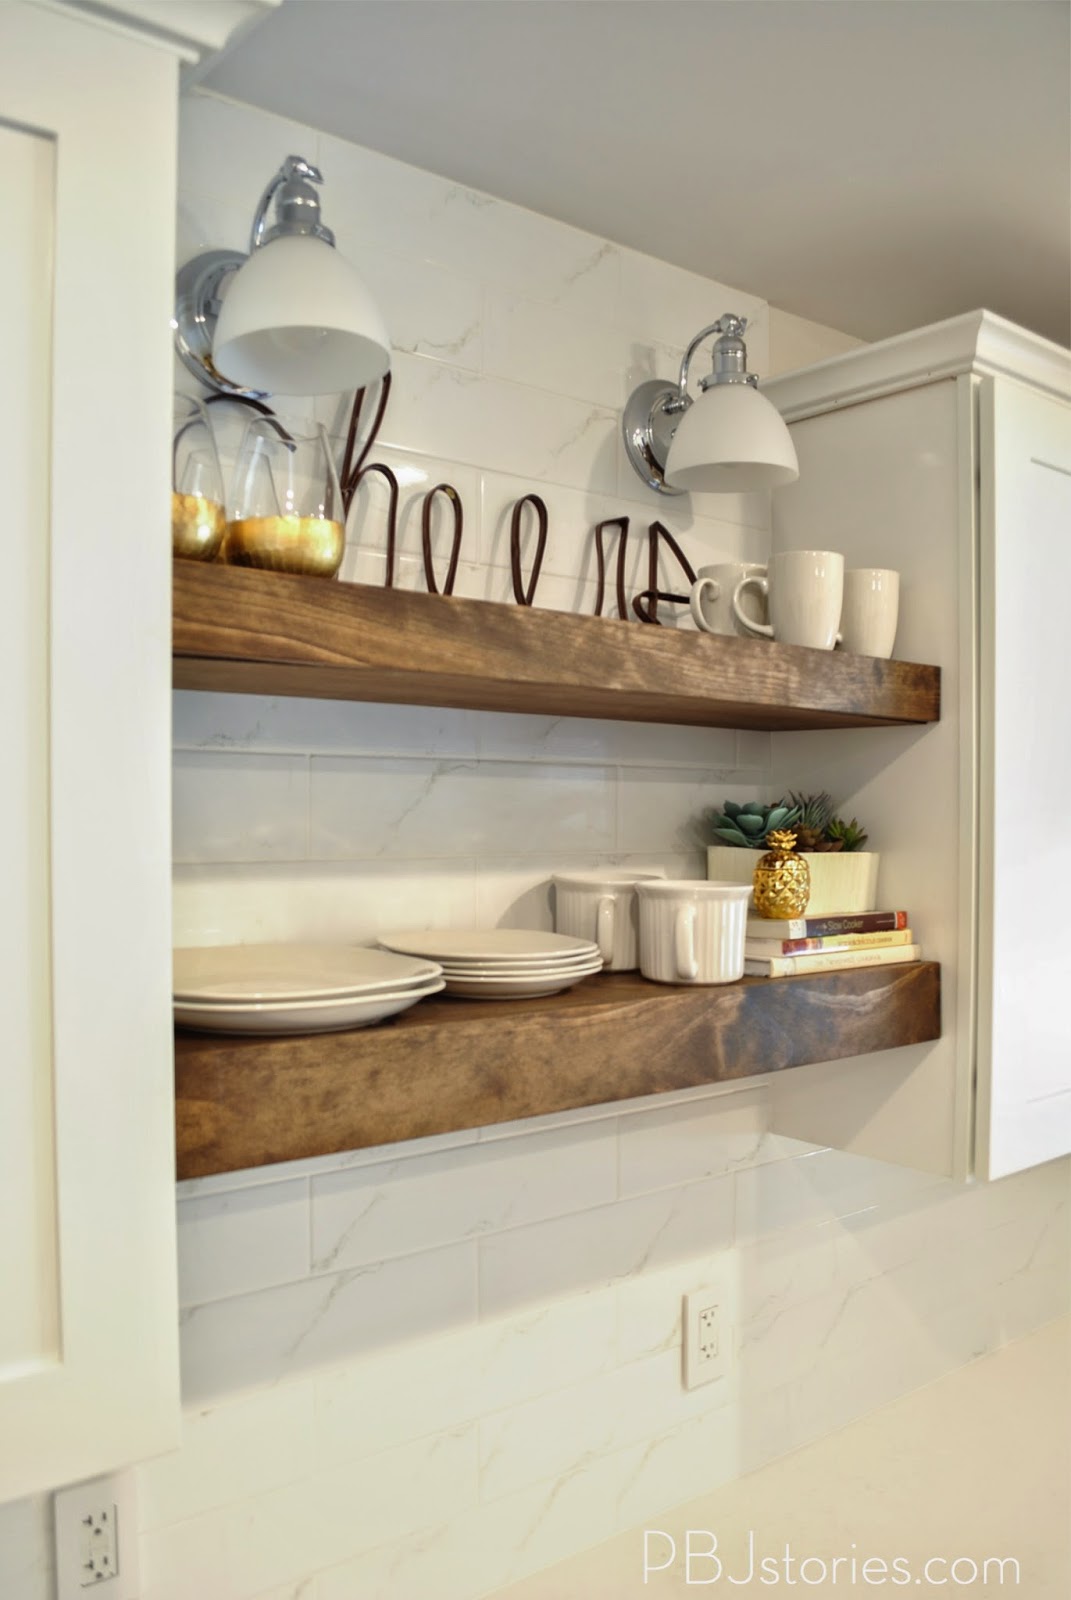 PBJstories: Our DIY Open Kitchen Shelves #PBJreno